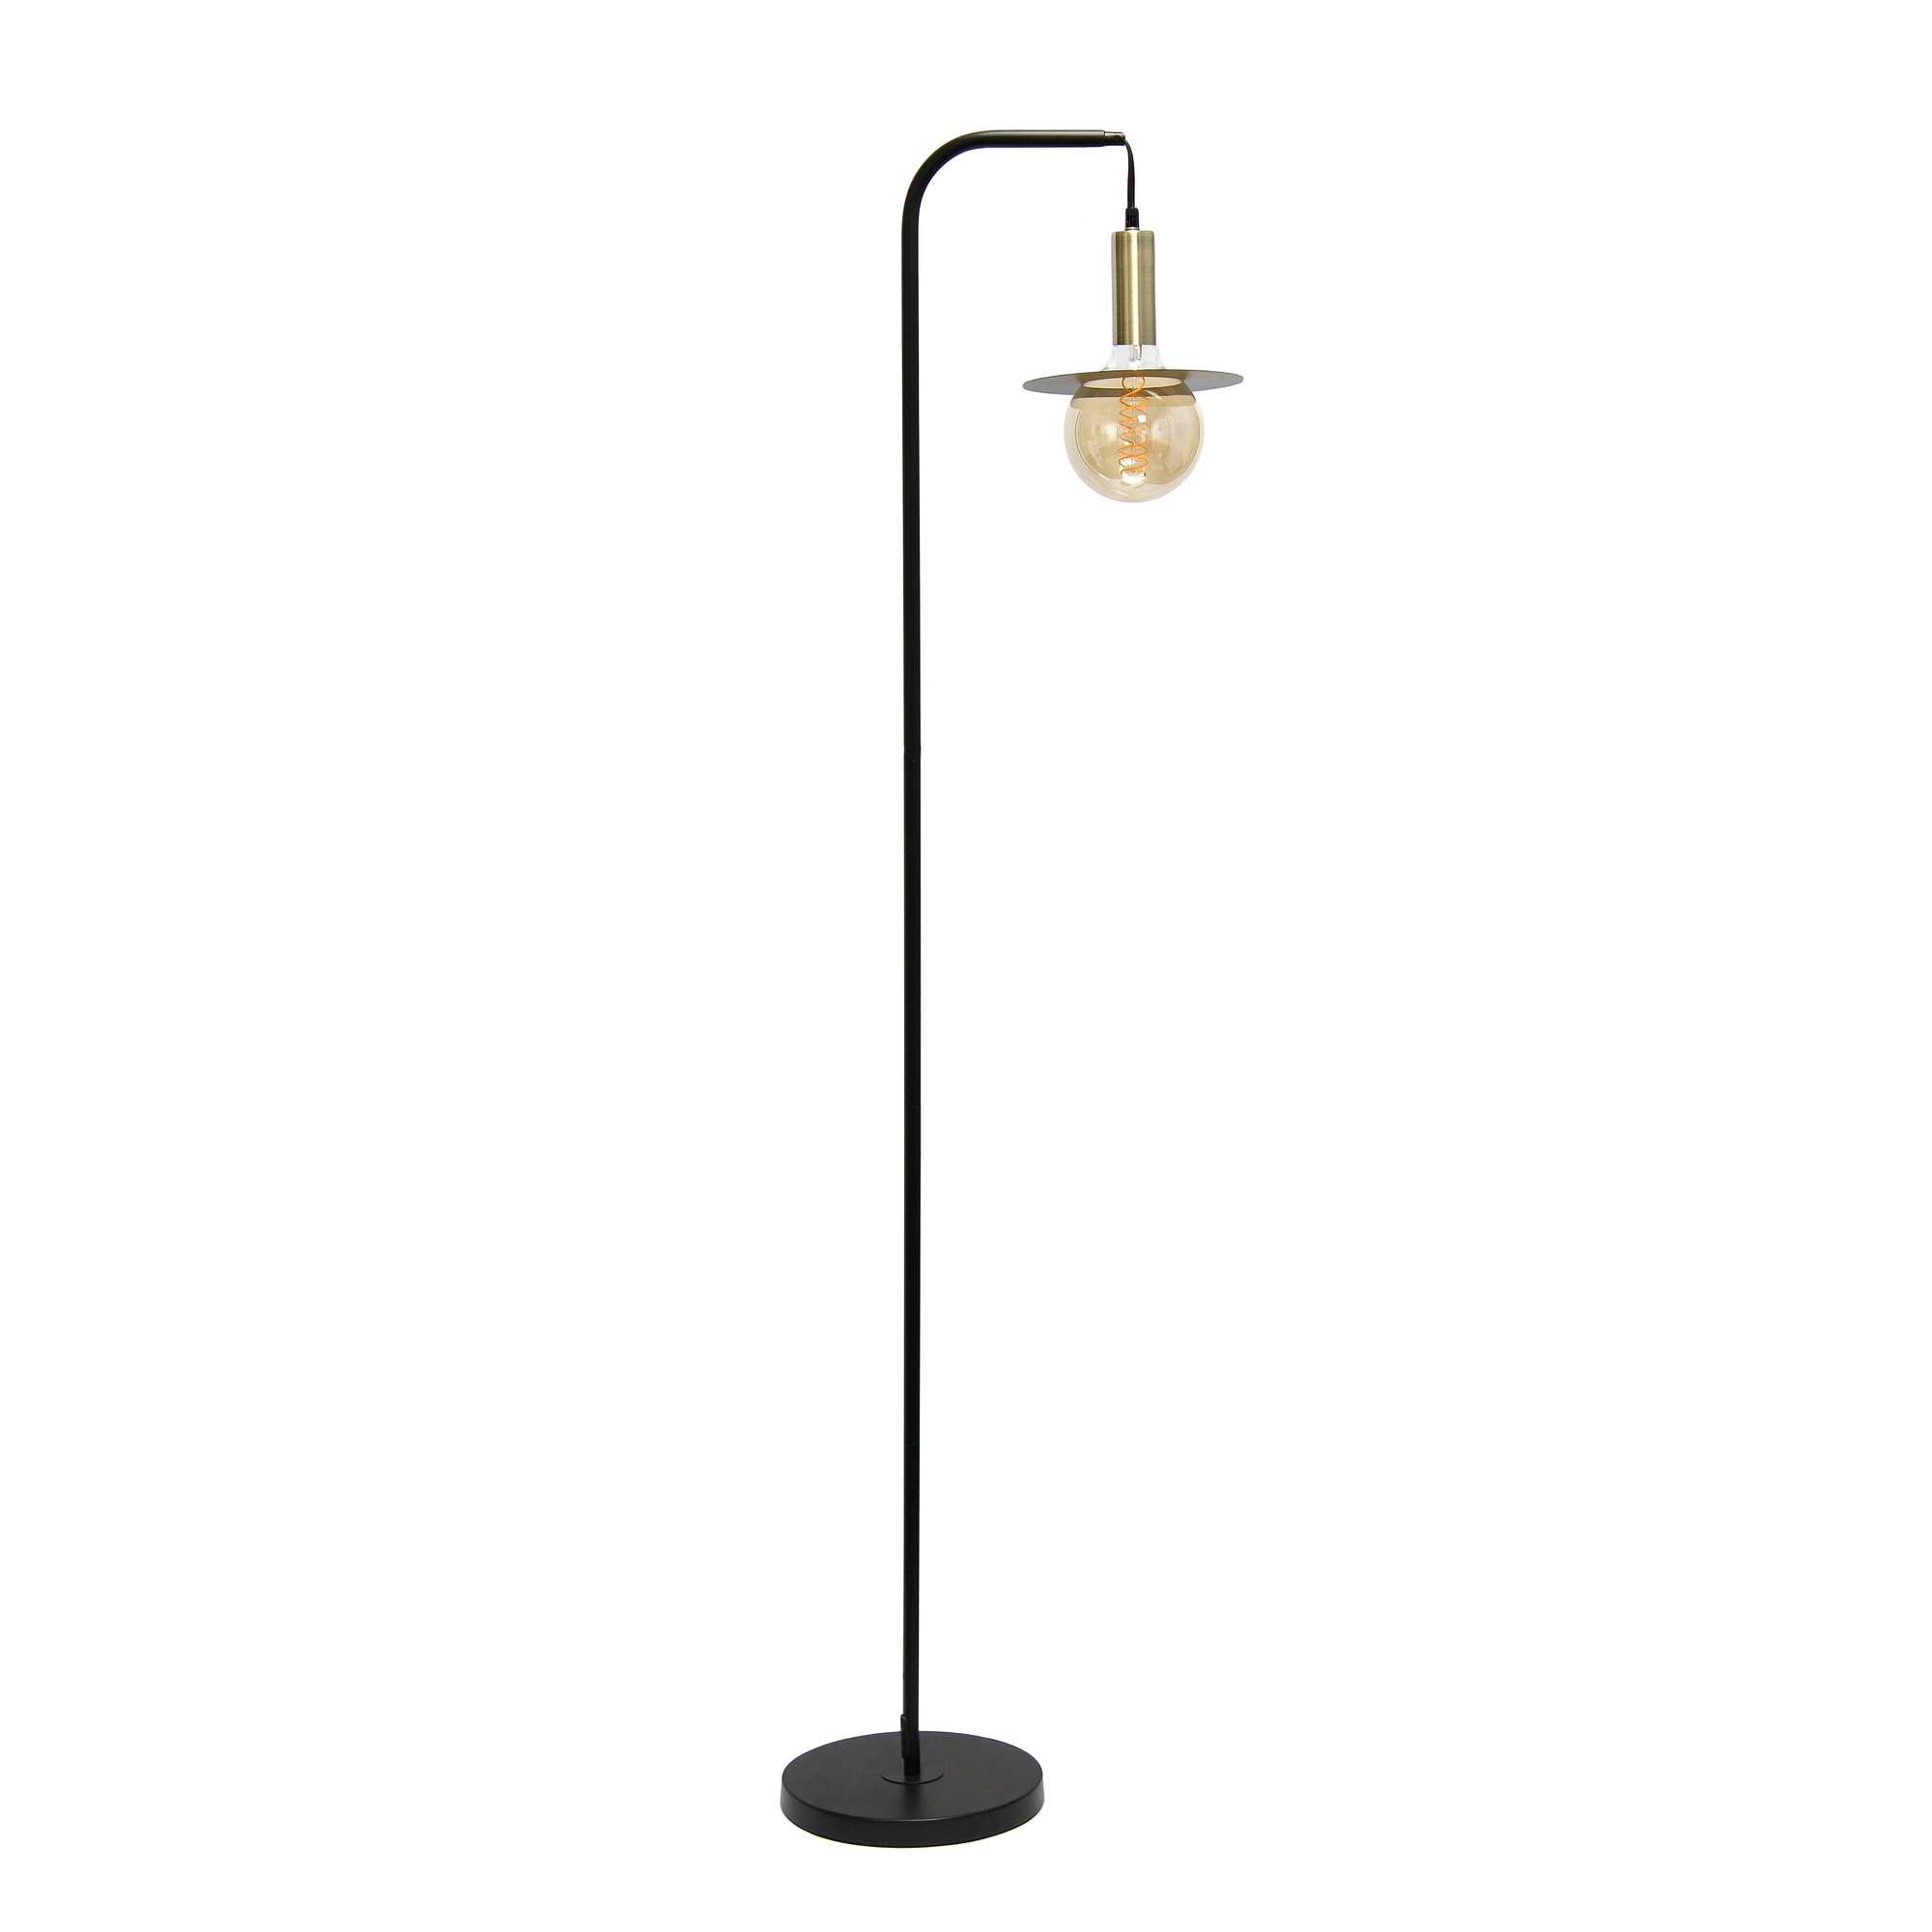 Lalia Home Oslo Floor Lamp, Black